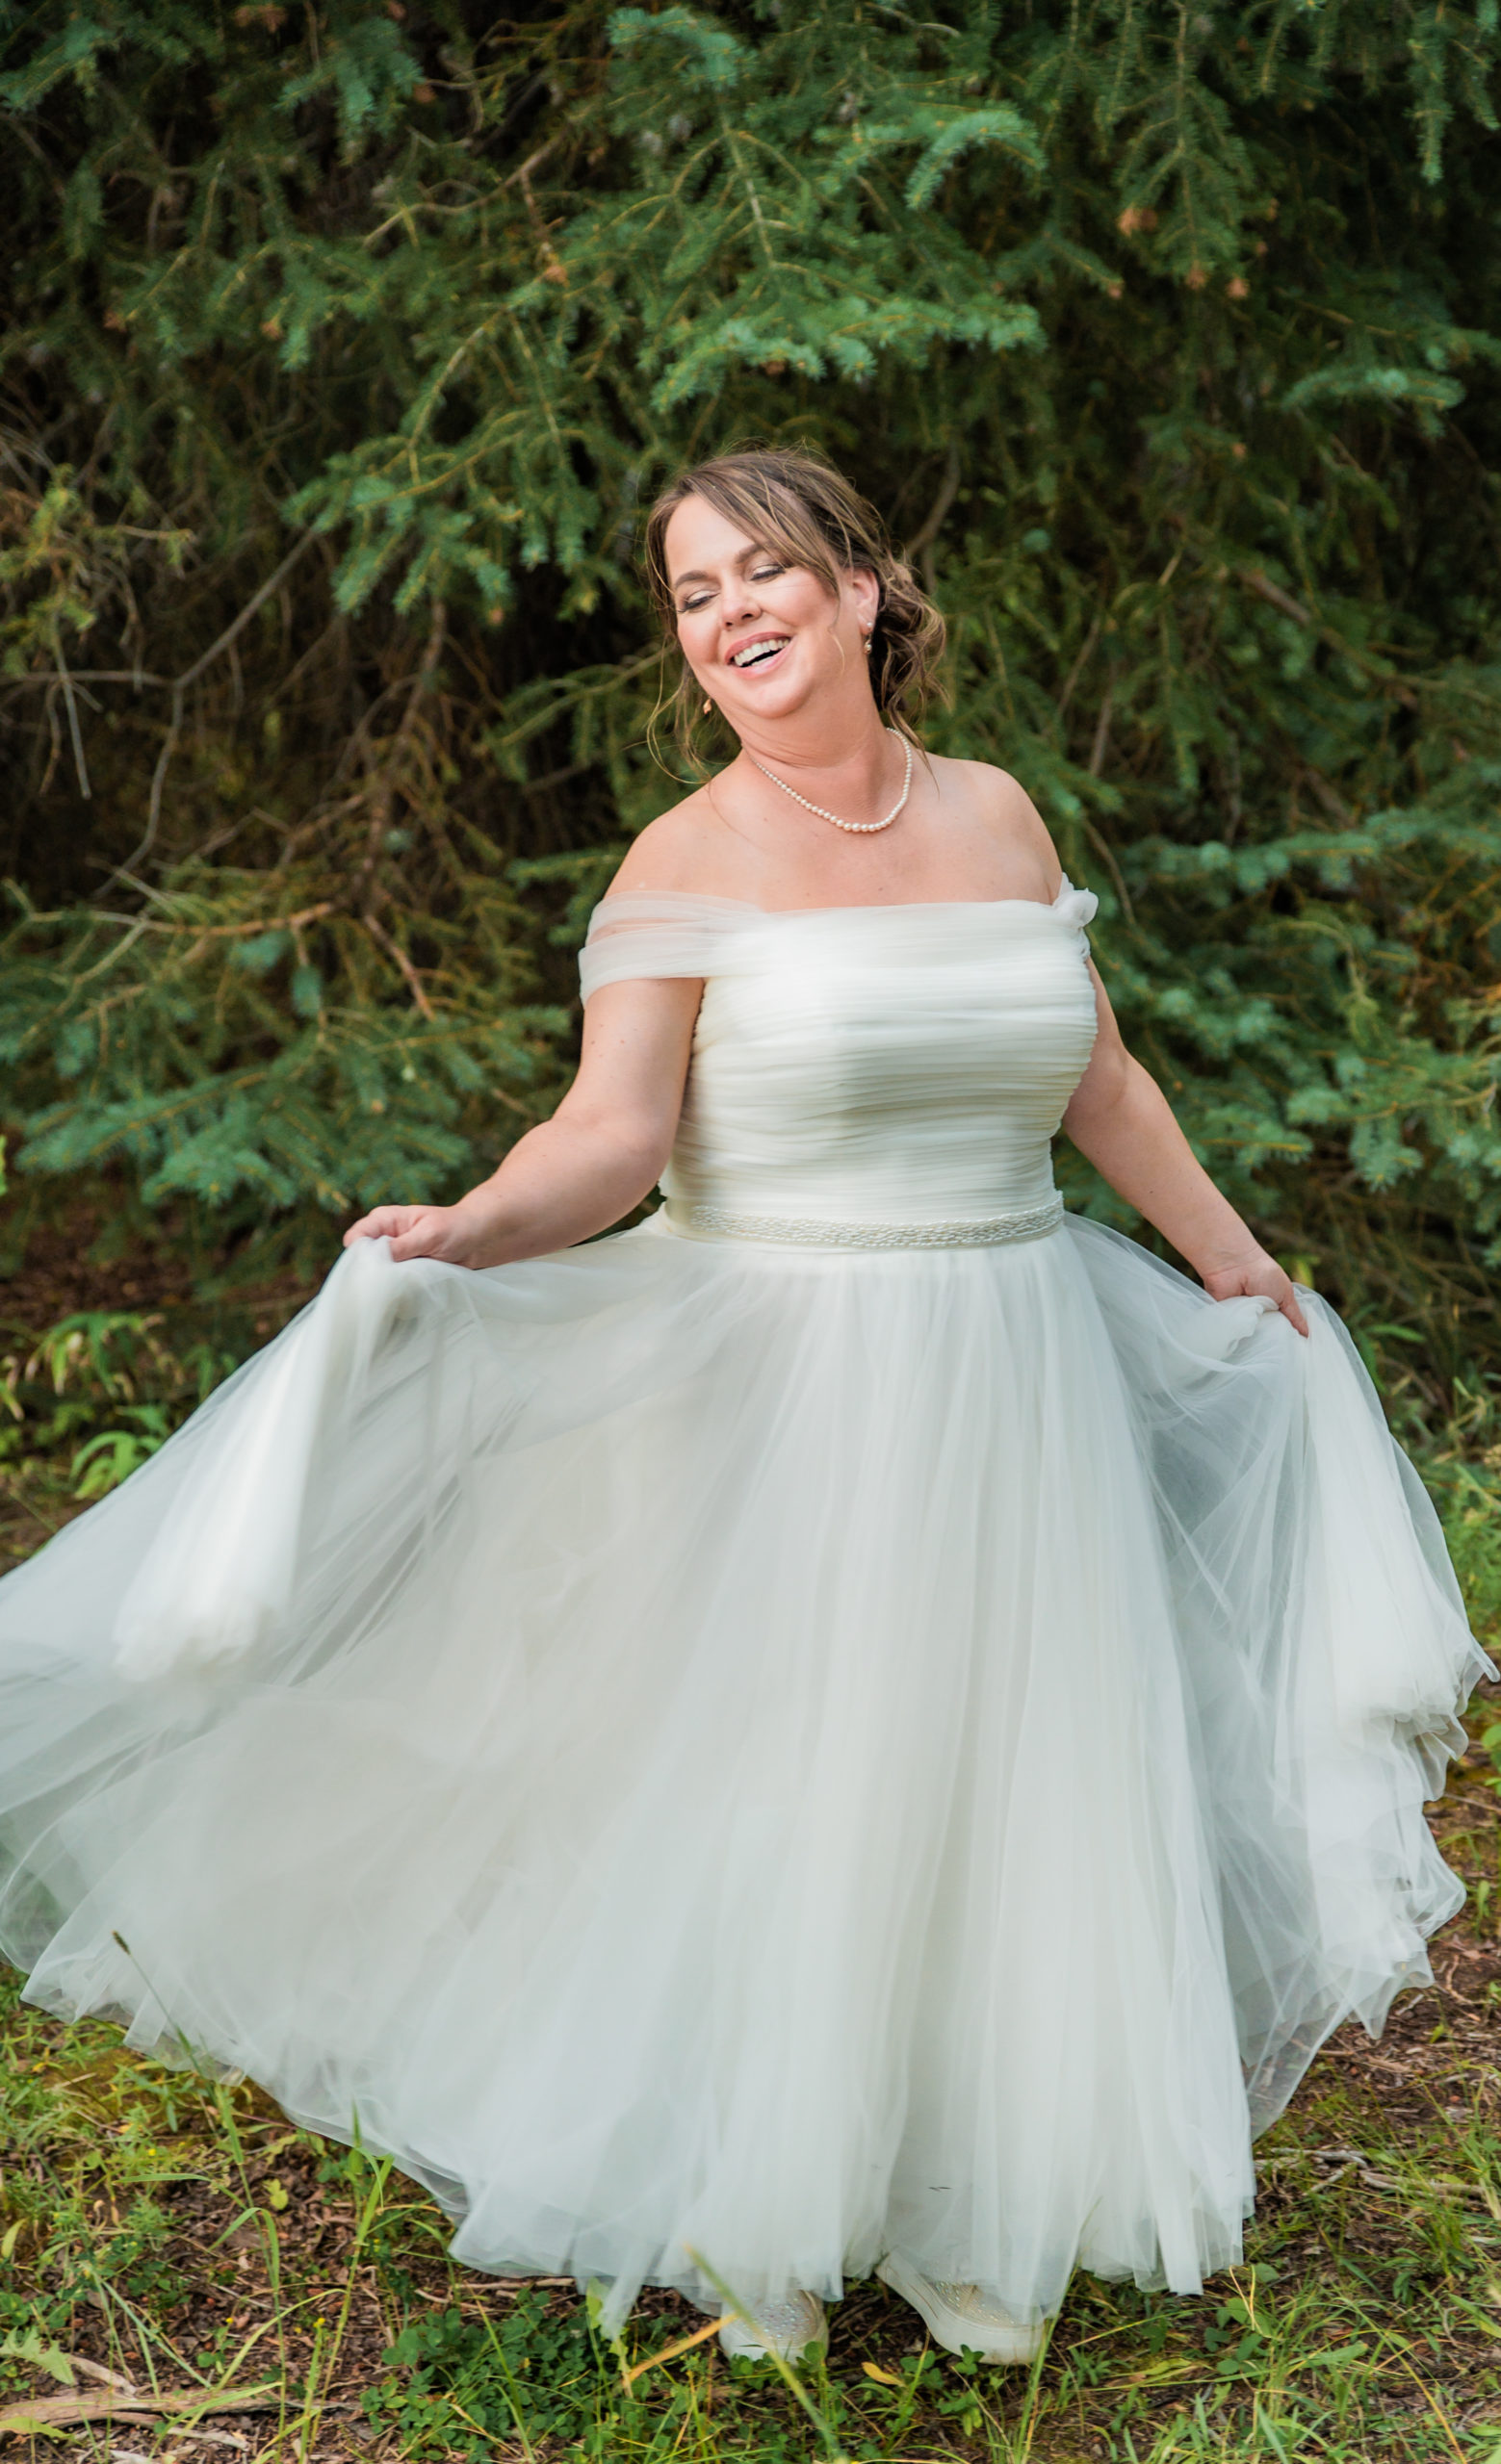 Jackson Hole photographer captures bride holding dress in Schwabacher's Landing Summer Elopement